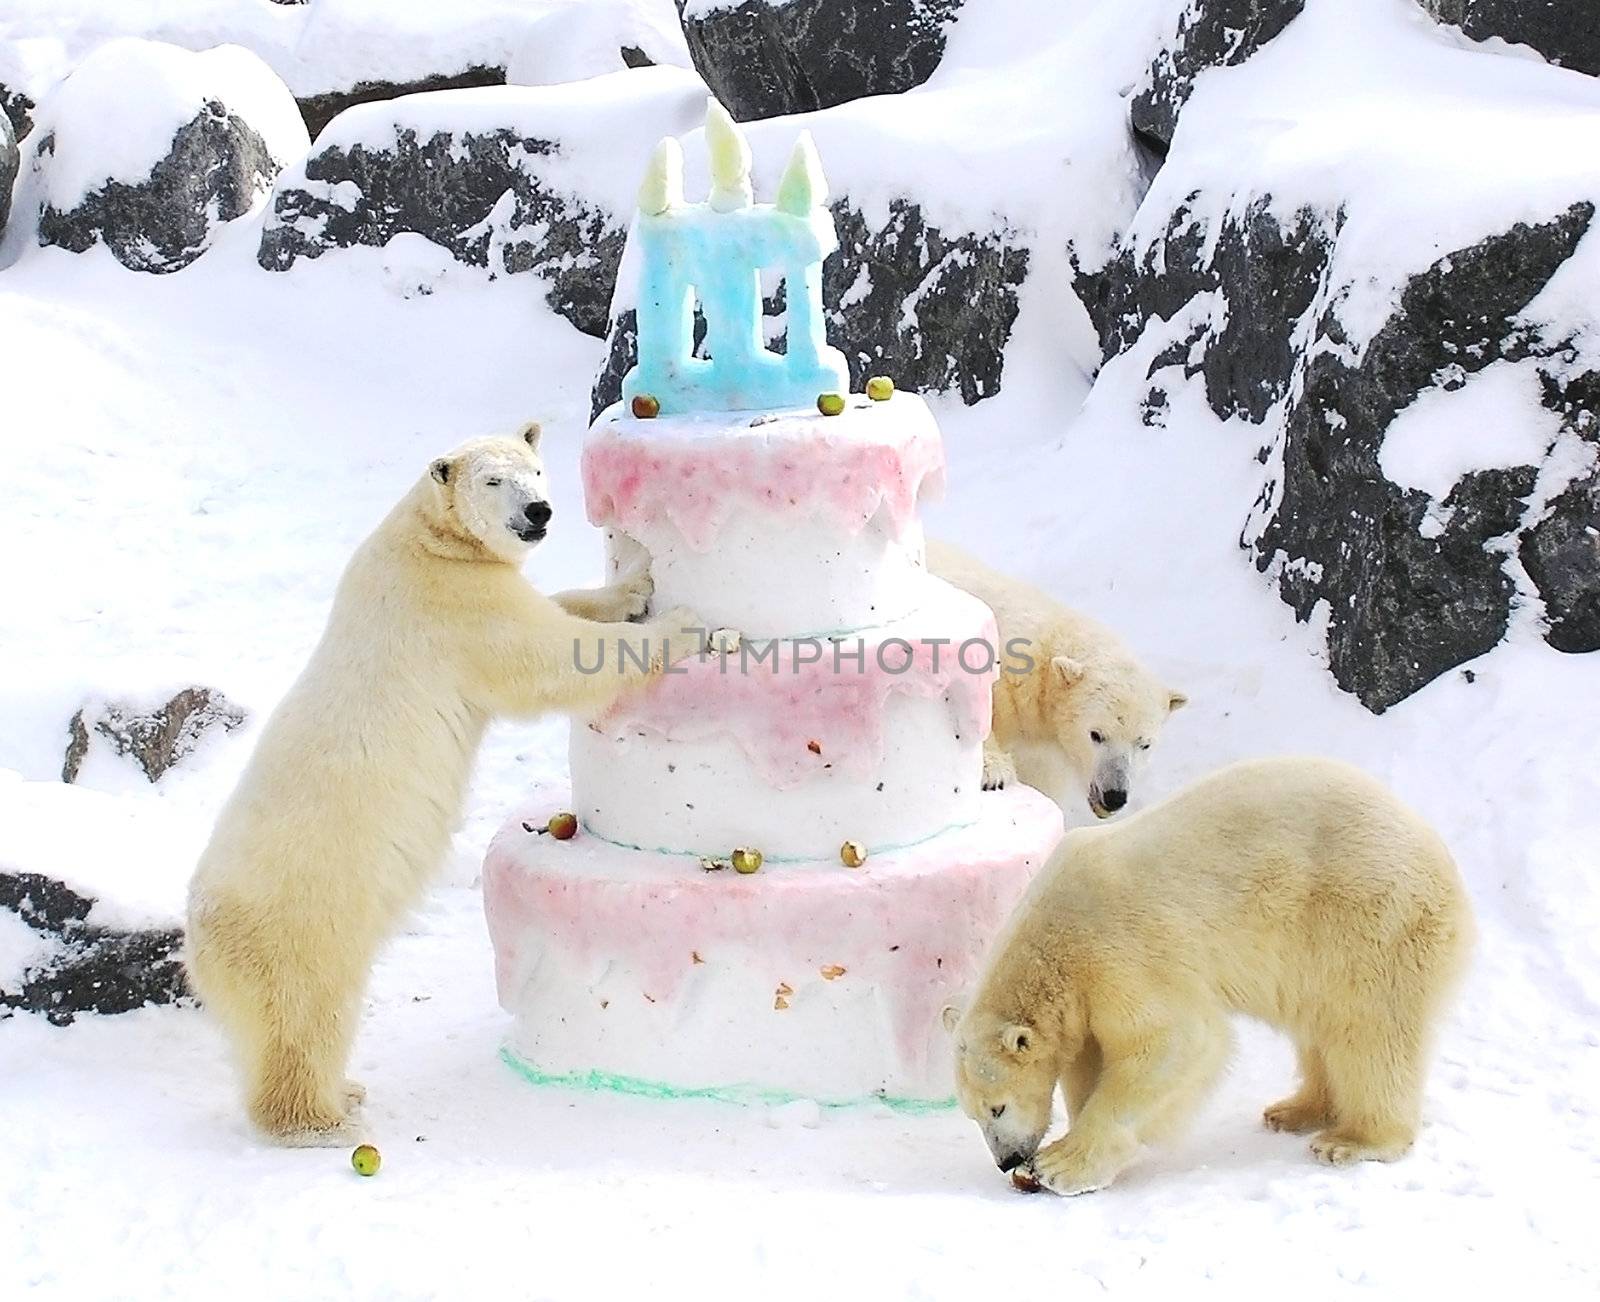 Polar bears giant birthday cake by Mirage3